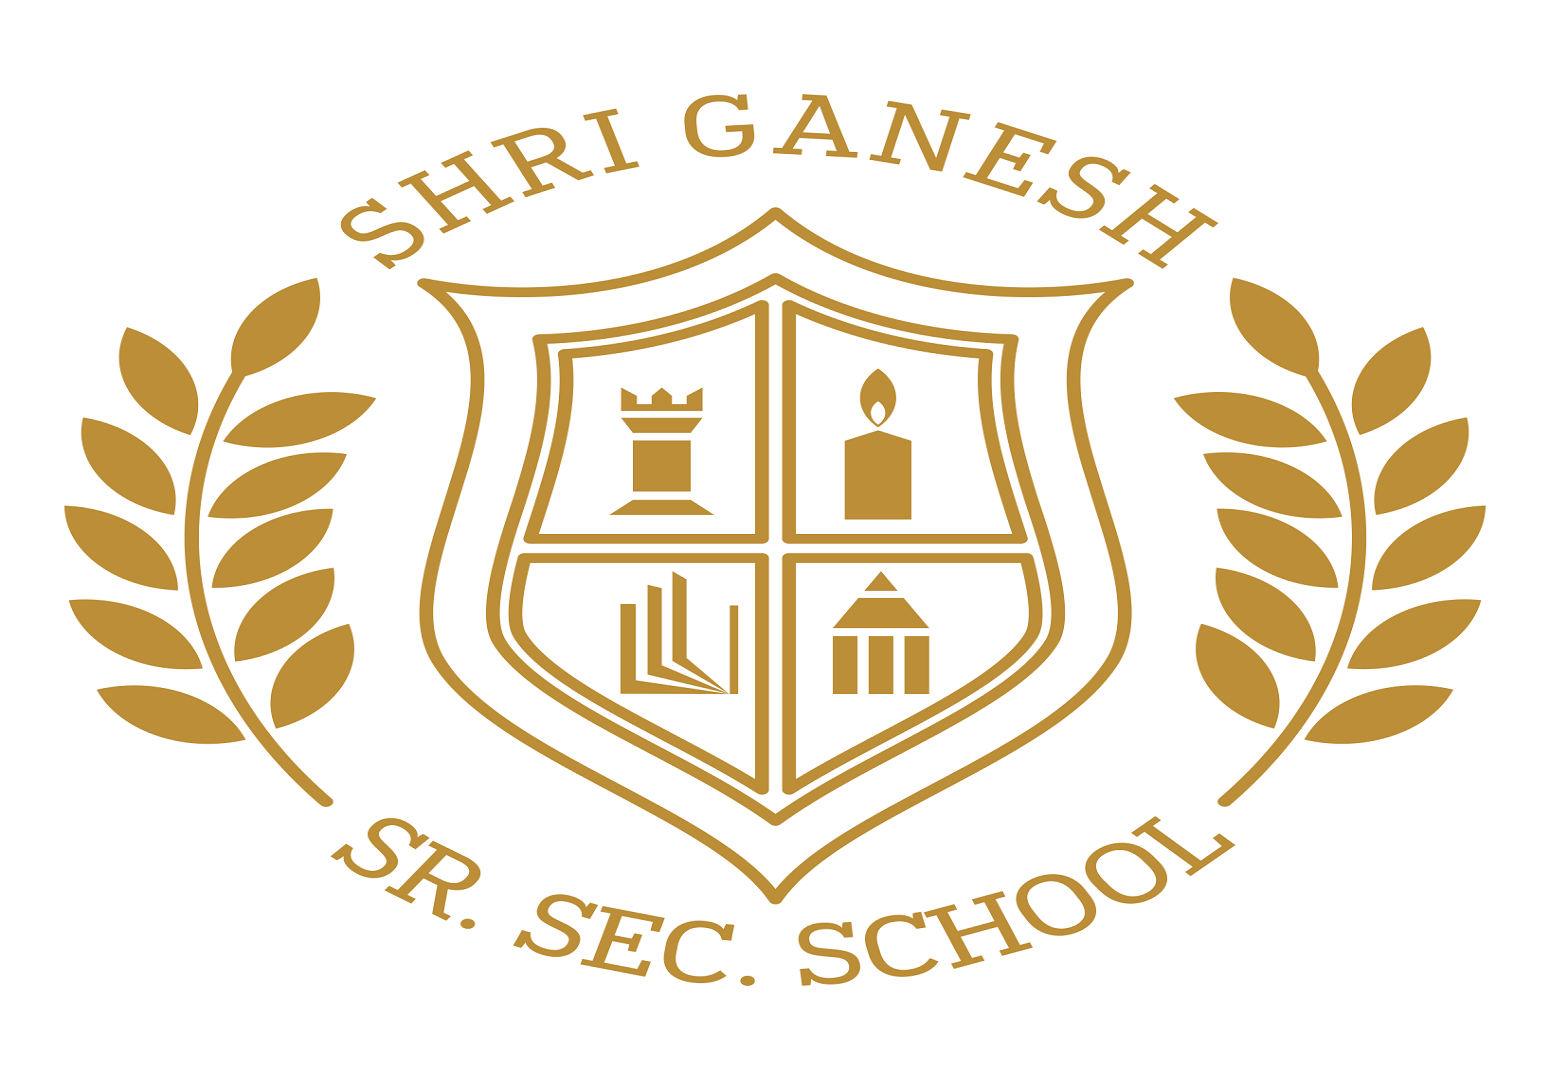 Shree Ganesha Logo Design by Amol Rahane on Dribbble